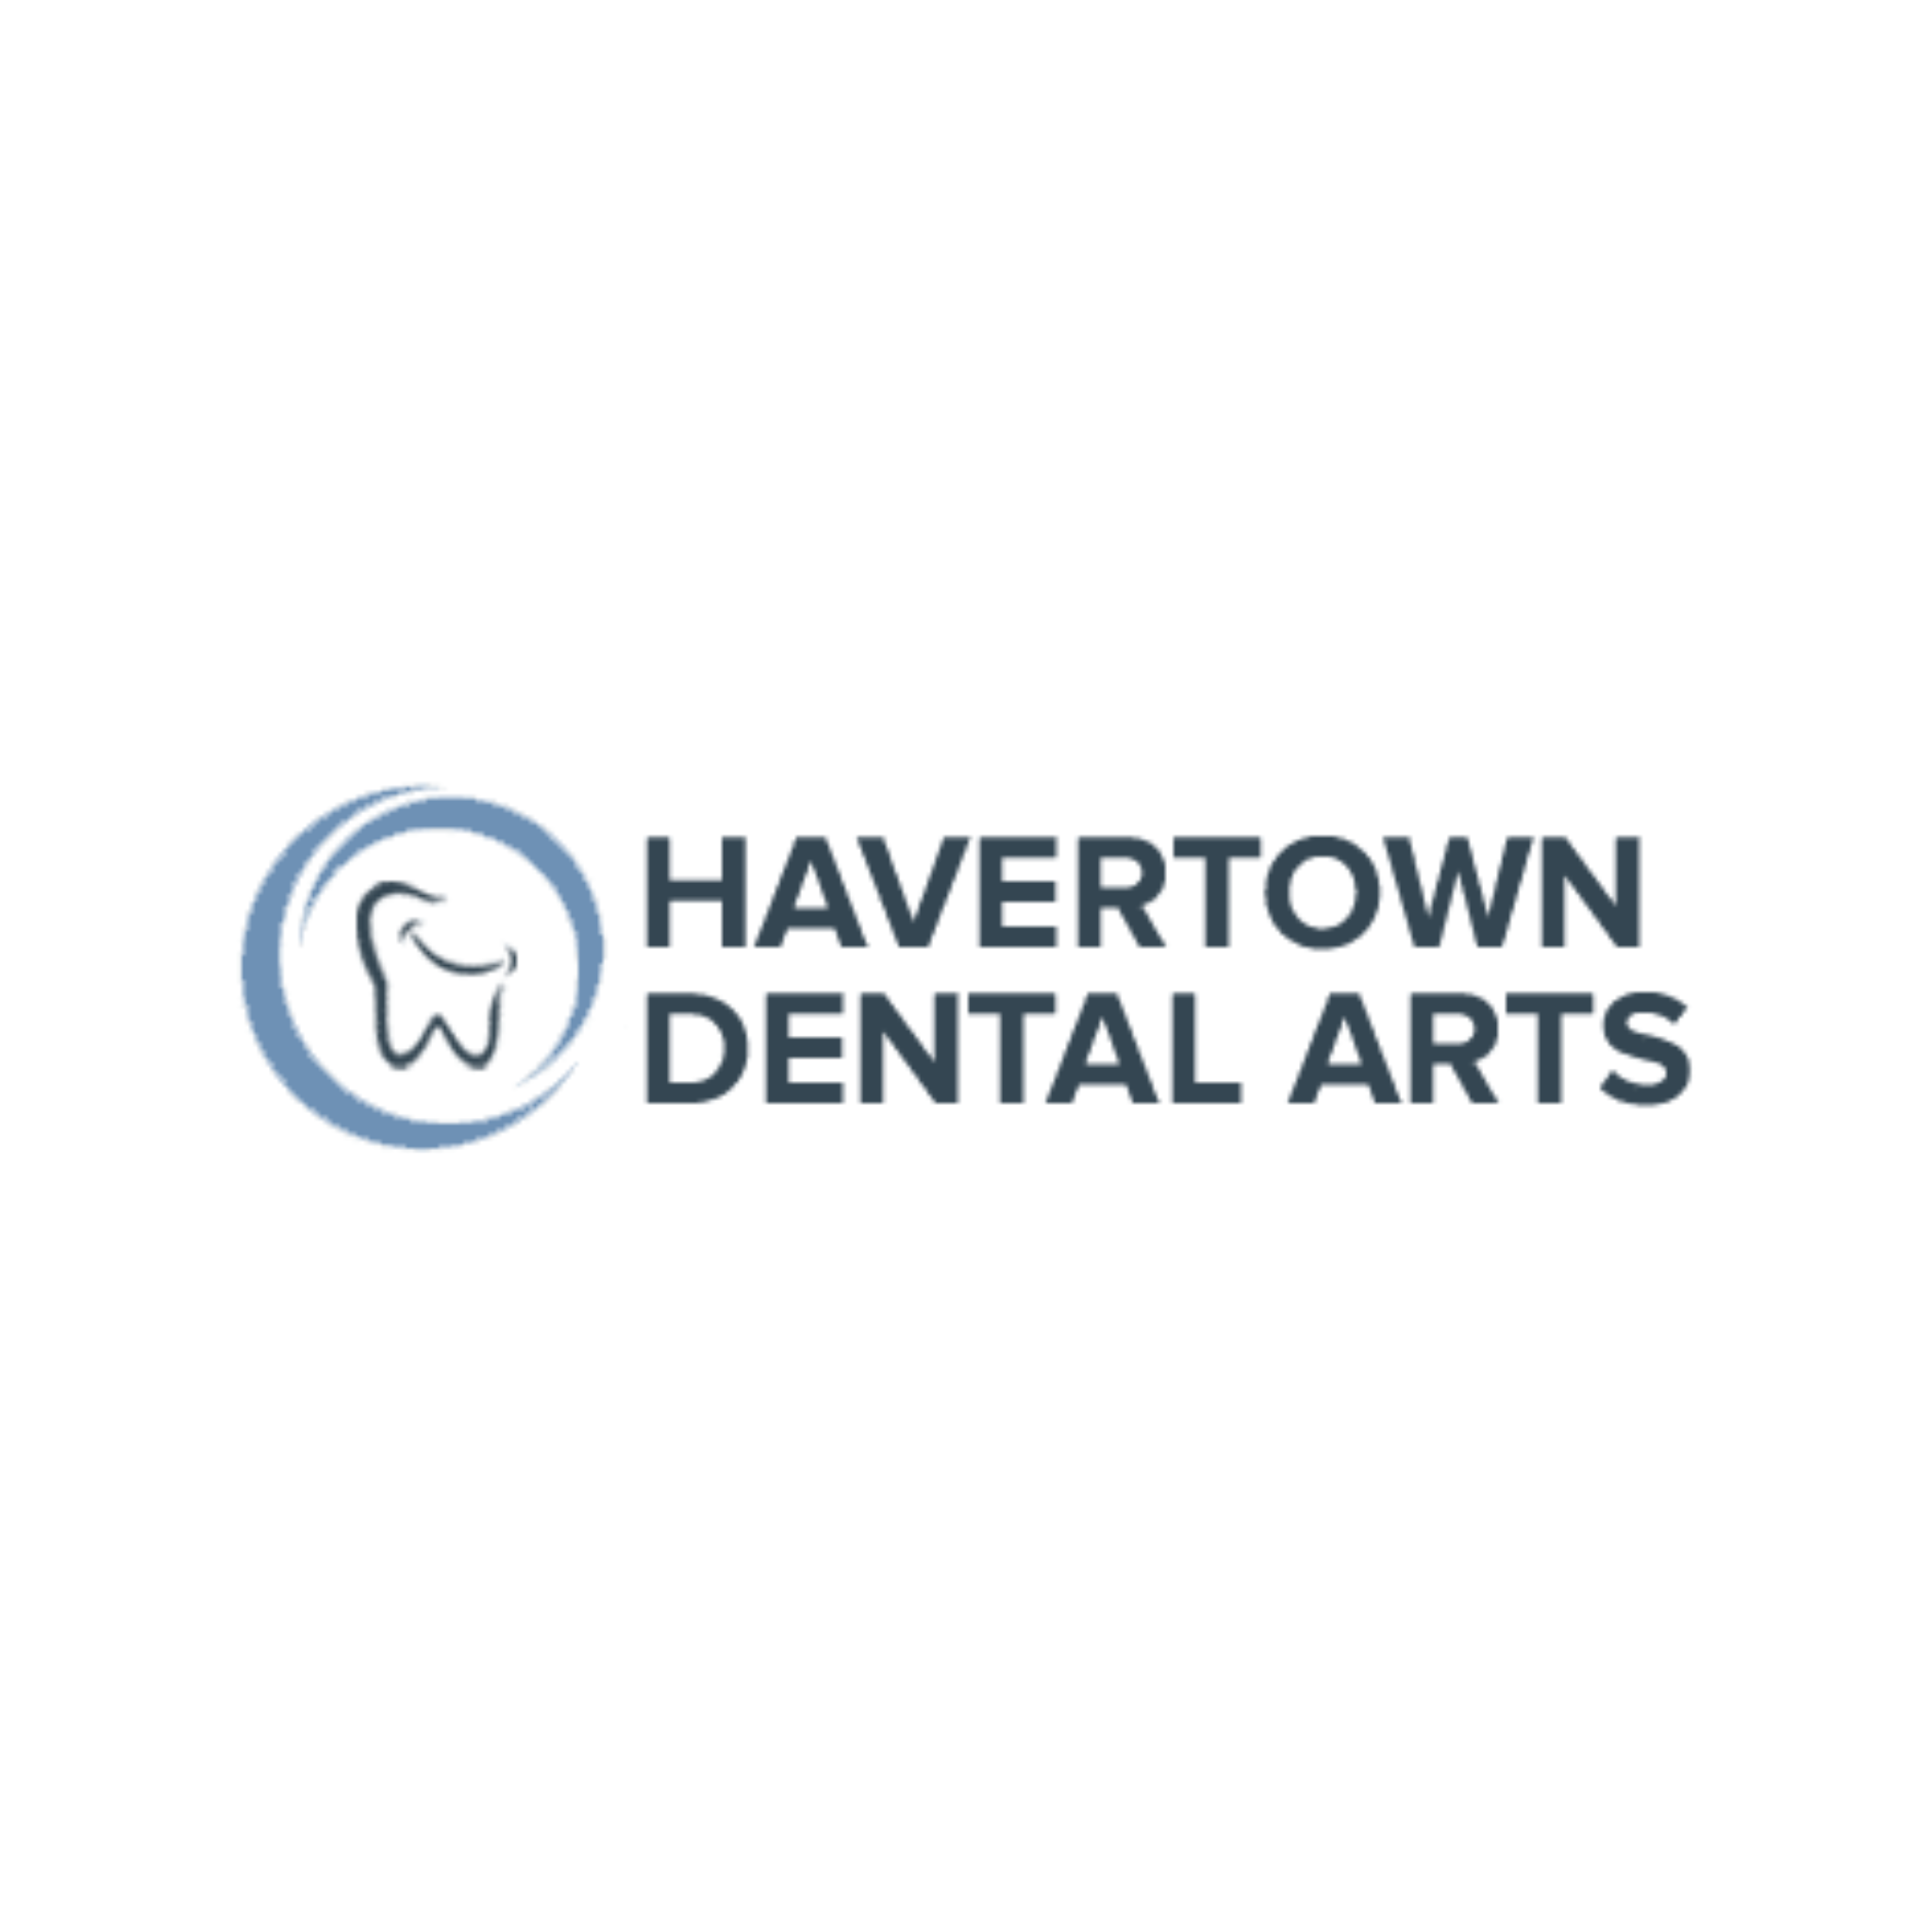 Havertown Dental Arts